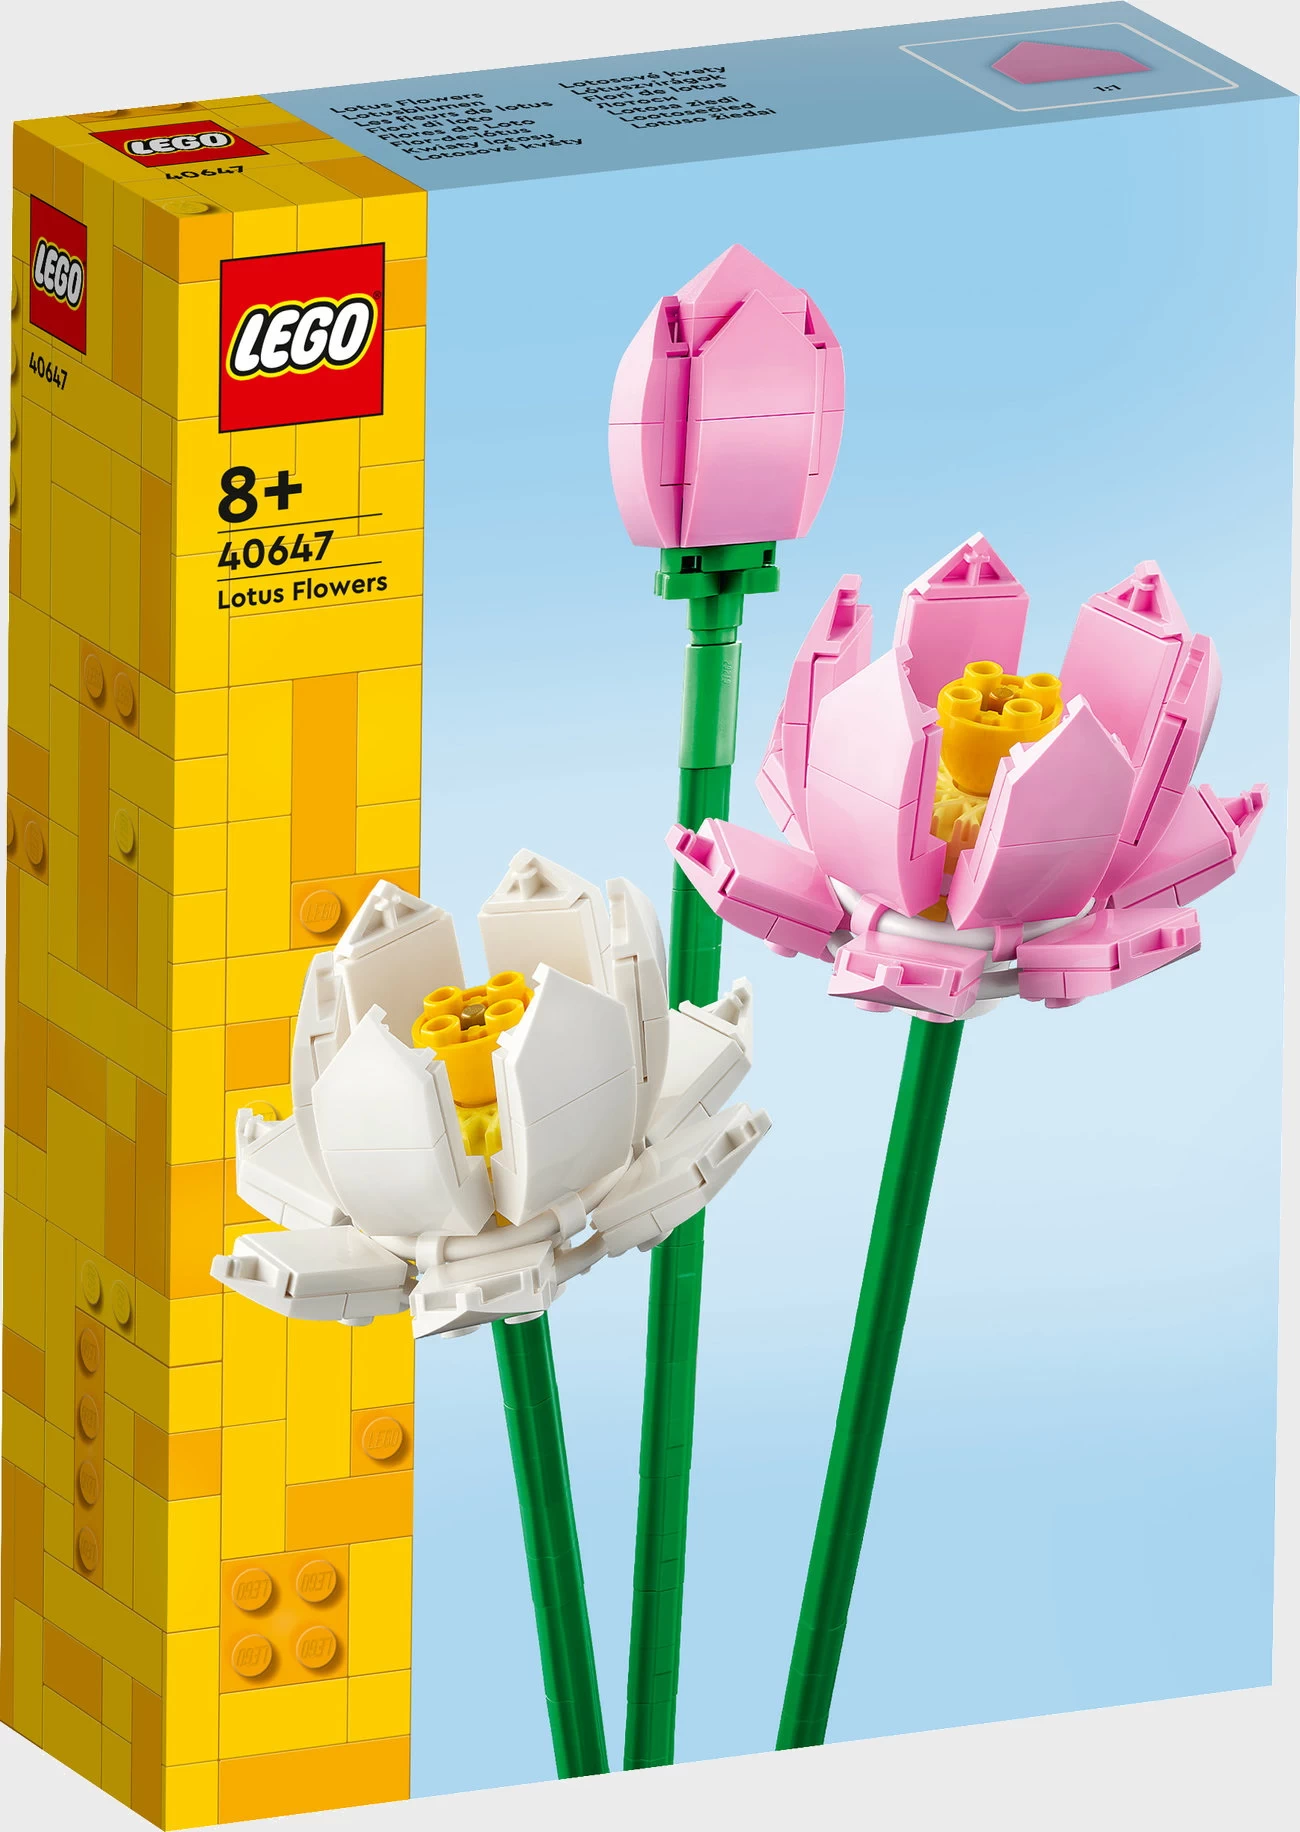 LEGO Iconic 40647 - Lotusblumen